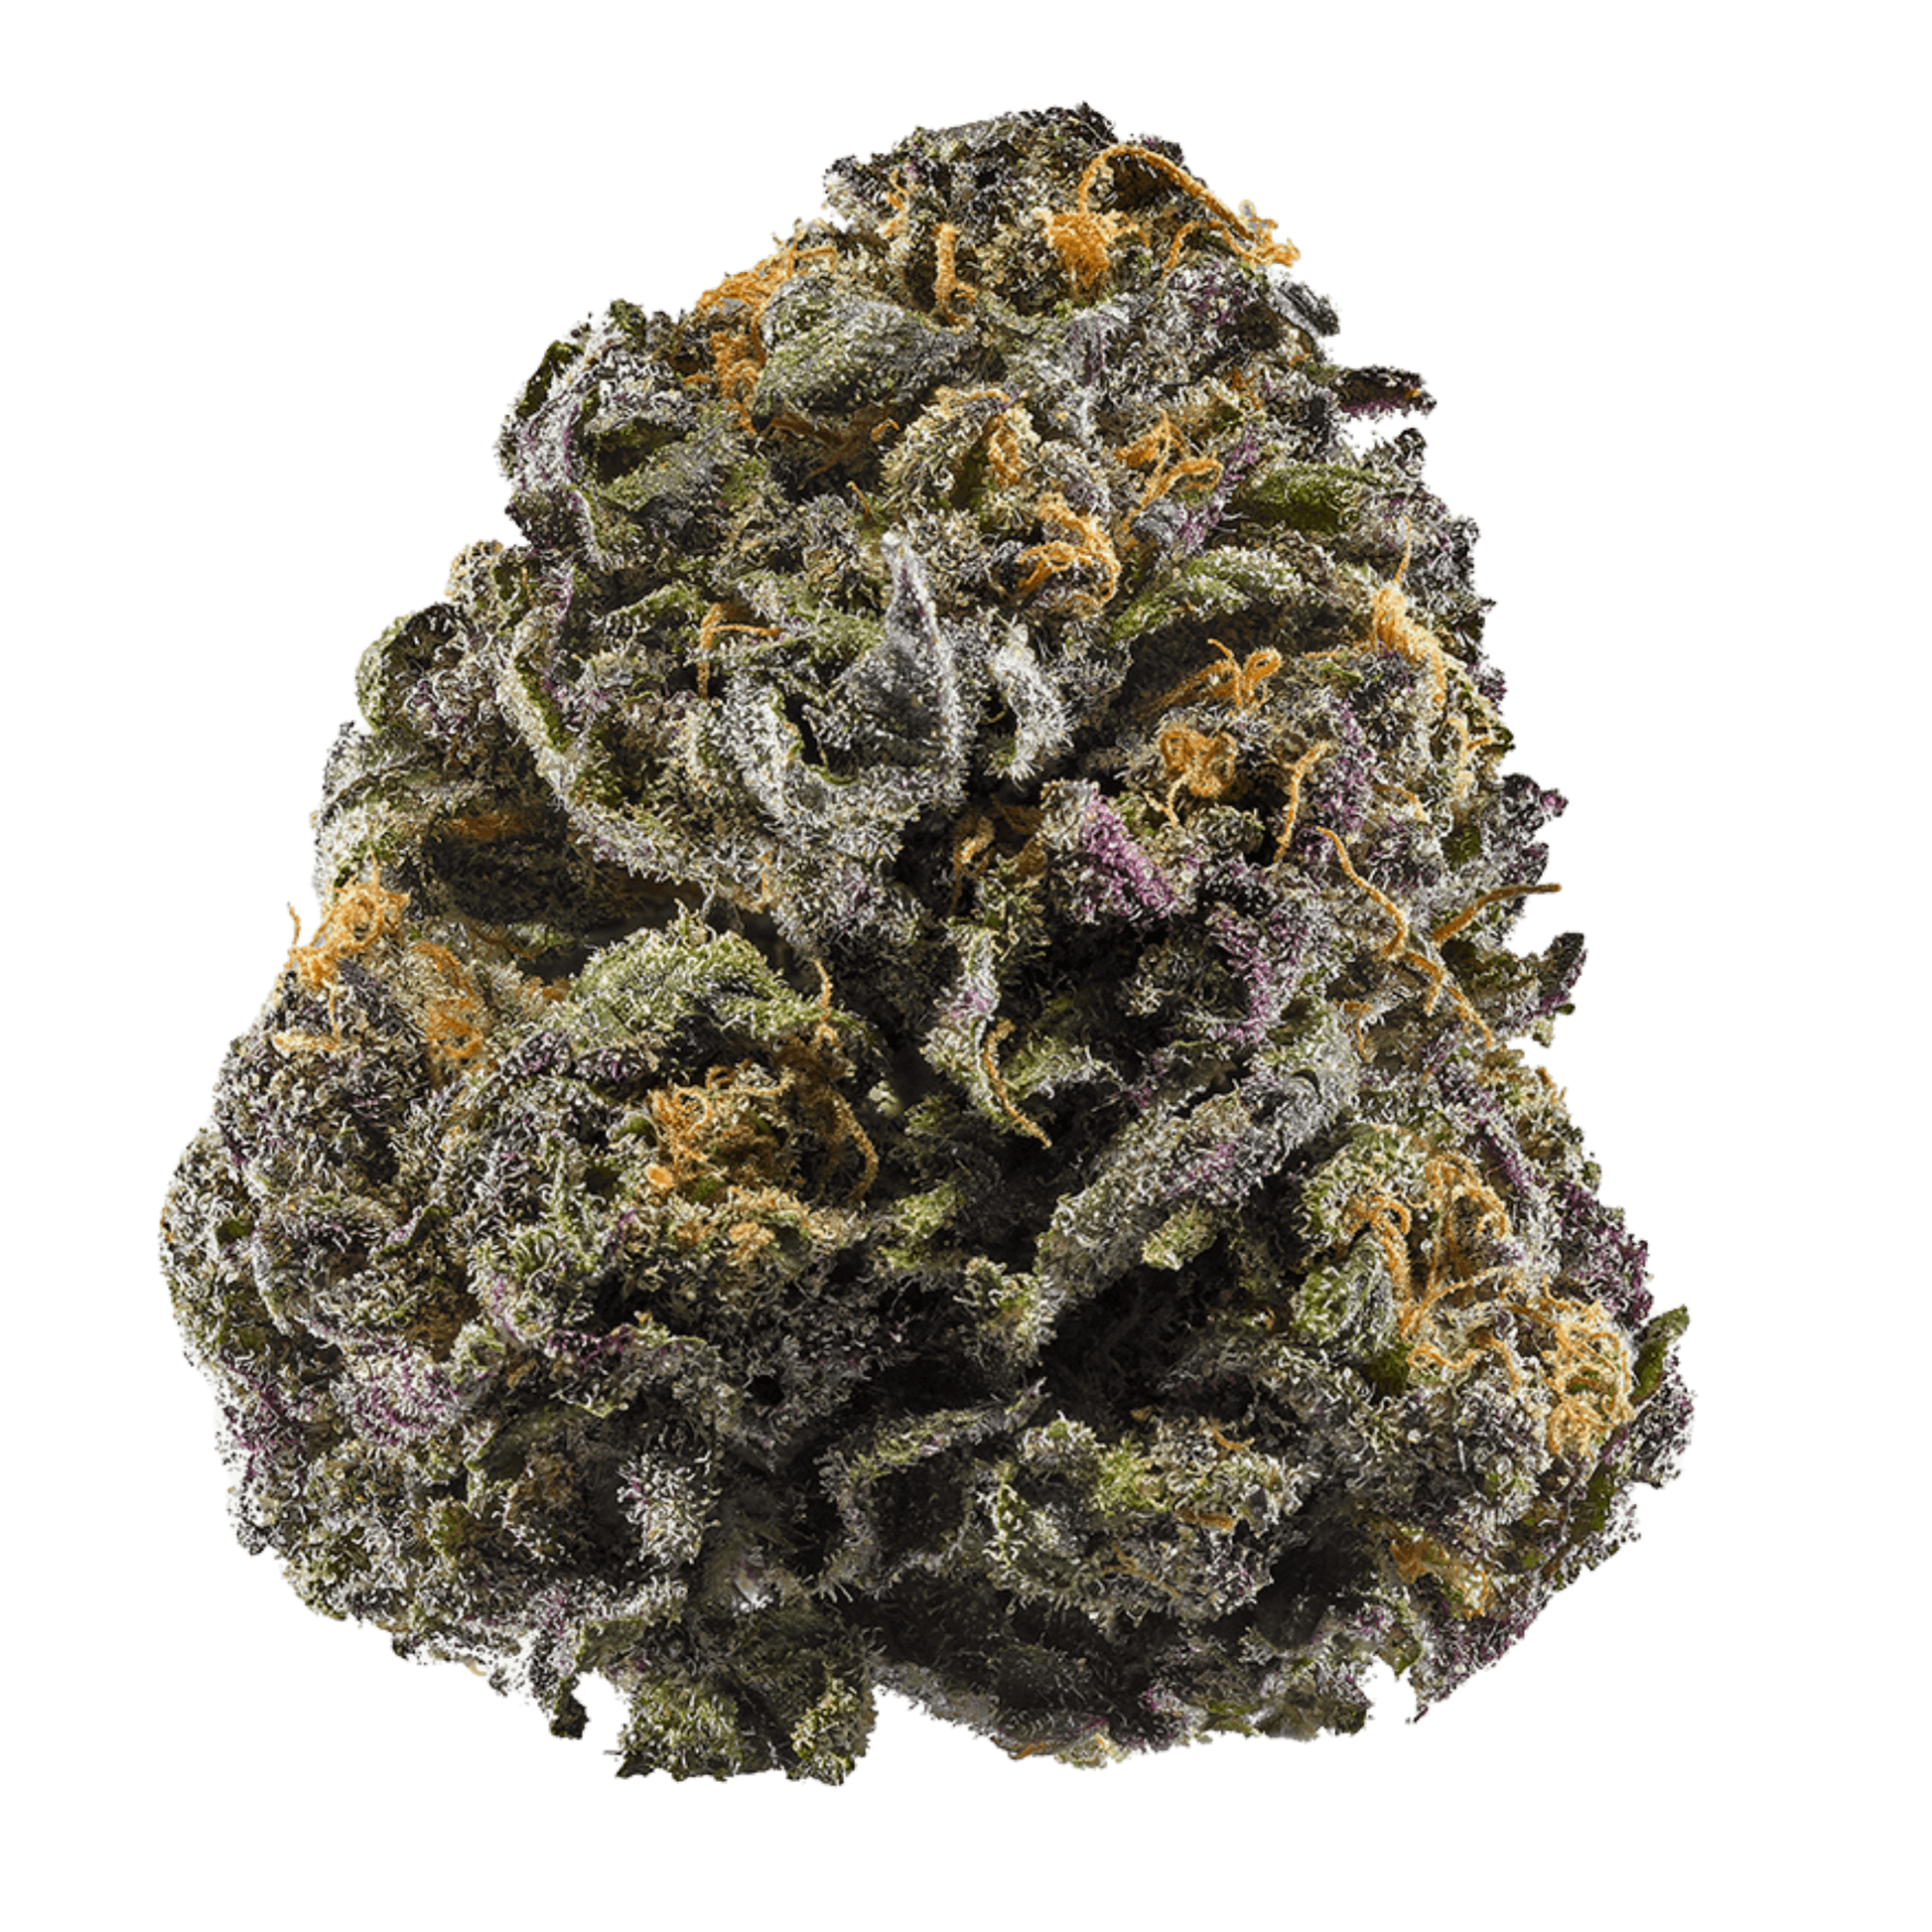 Grandaddy Purple, (AKA: GDP, Grandaddy Purple) Purple Urkle x Big Bud, Feminized Cannabis Seeds